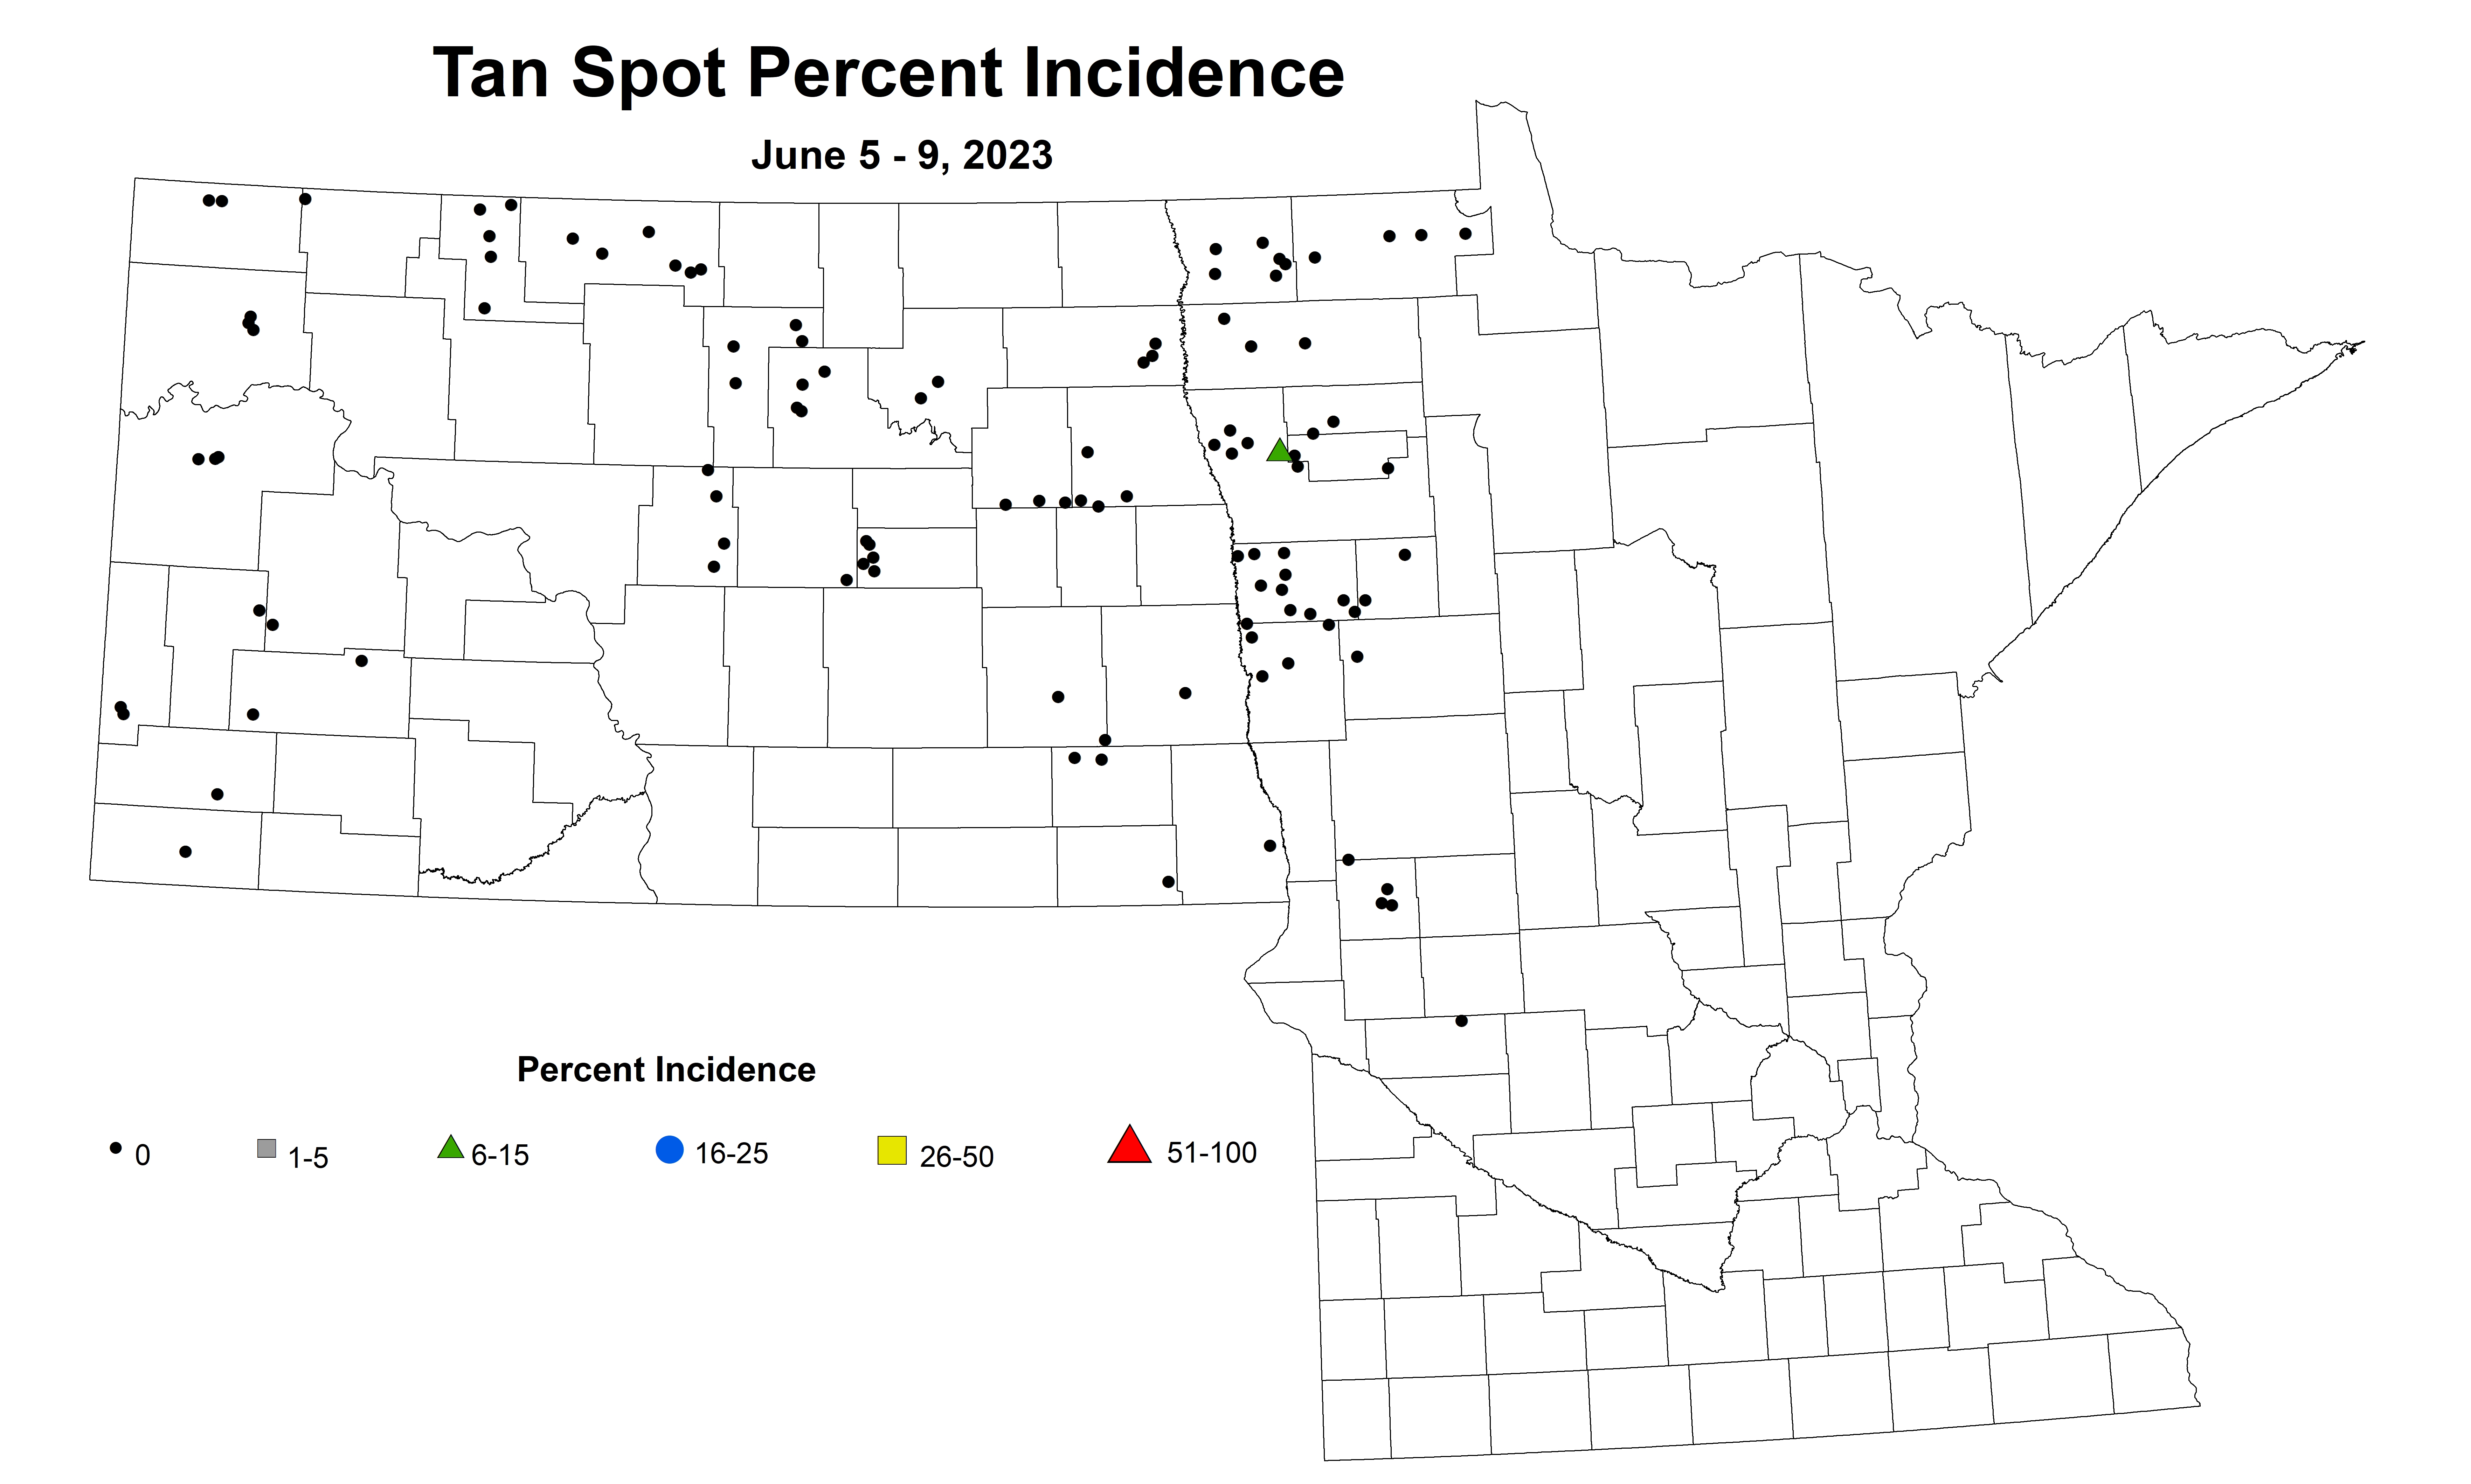 wheat tan spot percent incidence June 5-9 2023